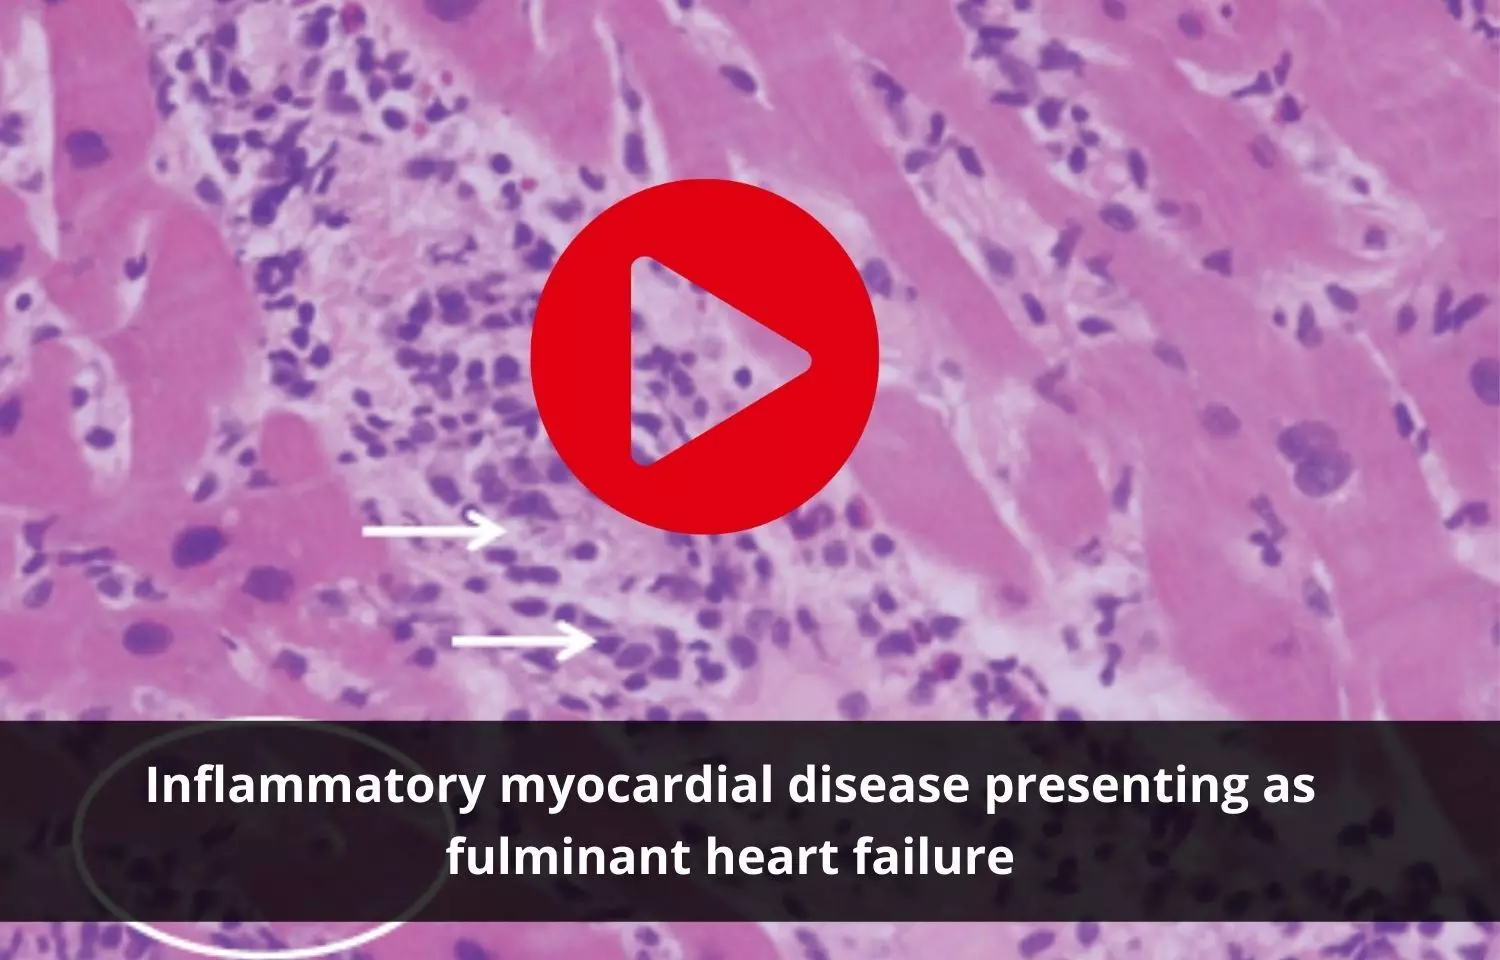 Inflammatory myocardial disease as symptom of fulminant heart failure